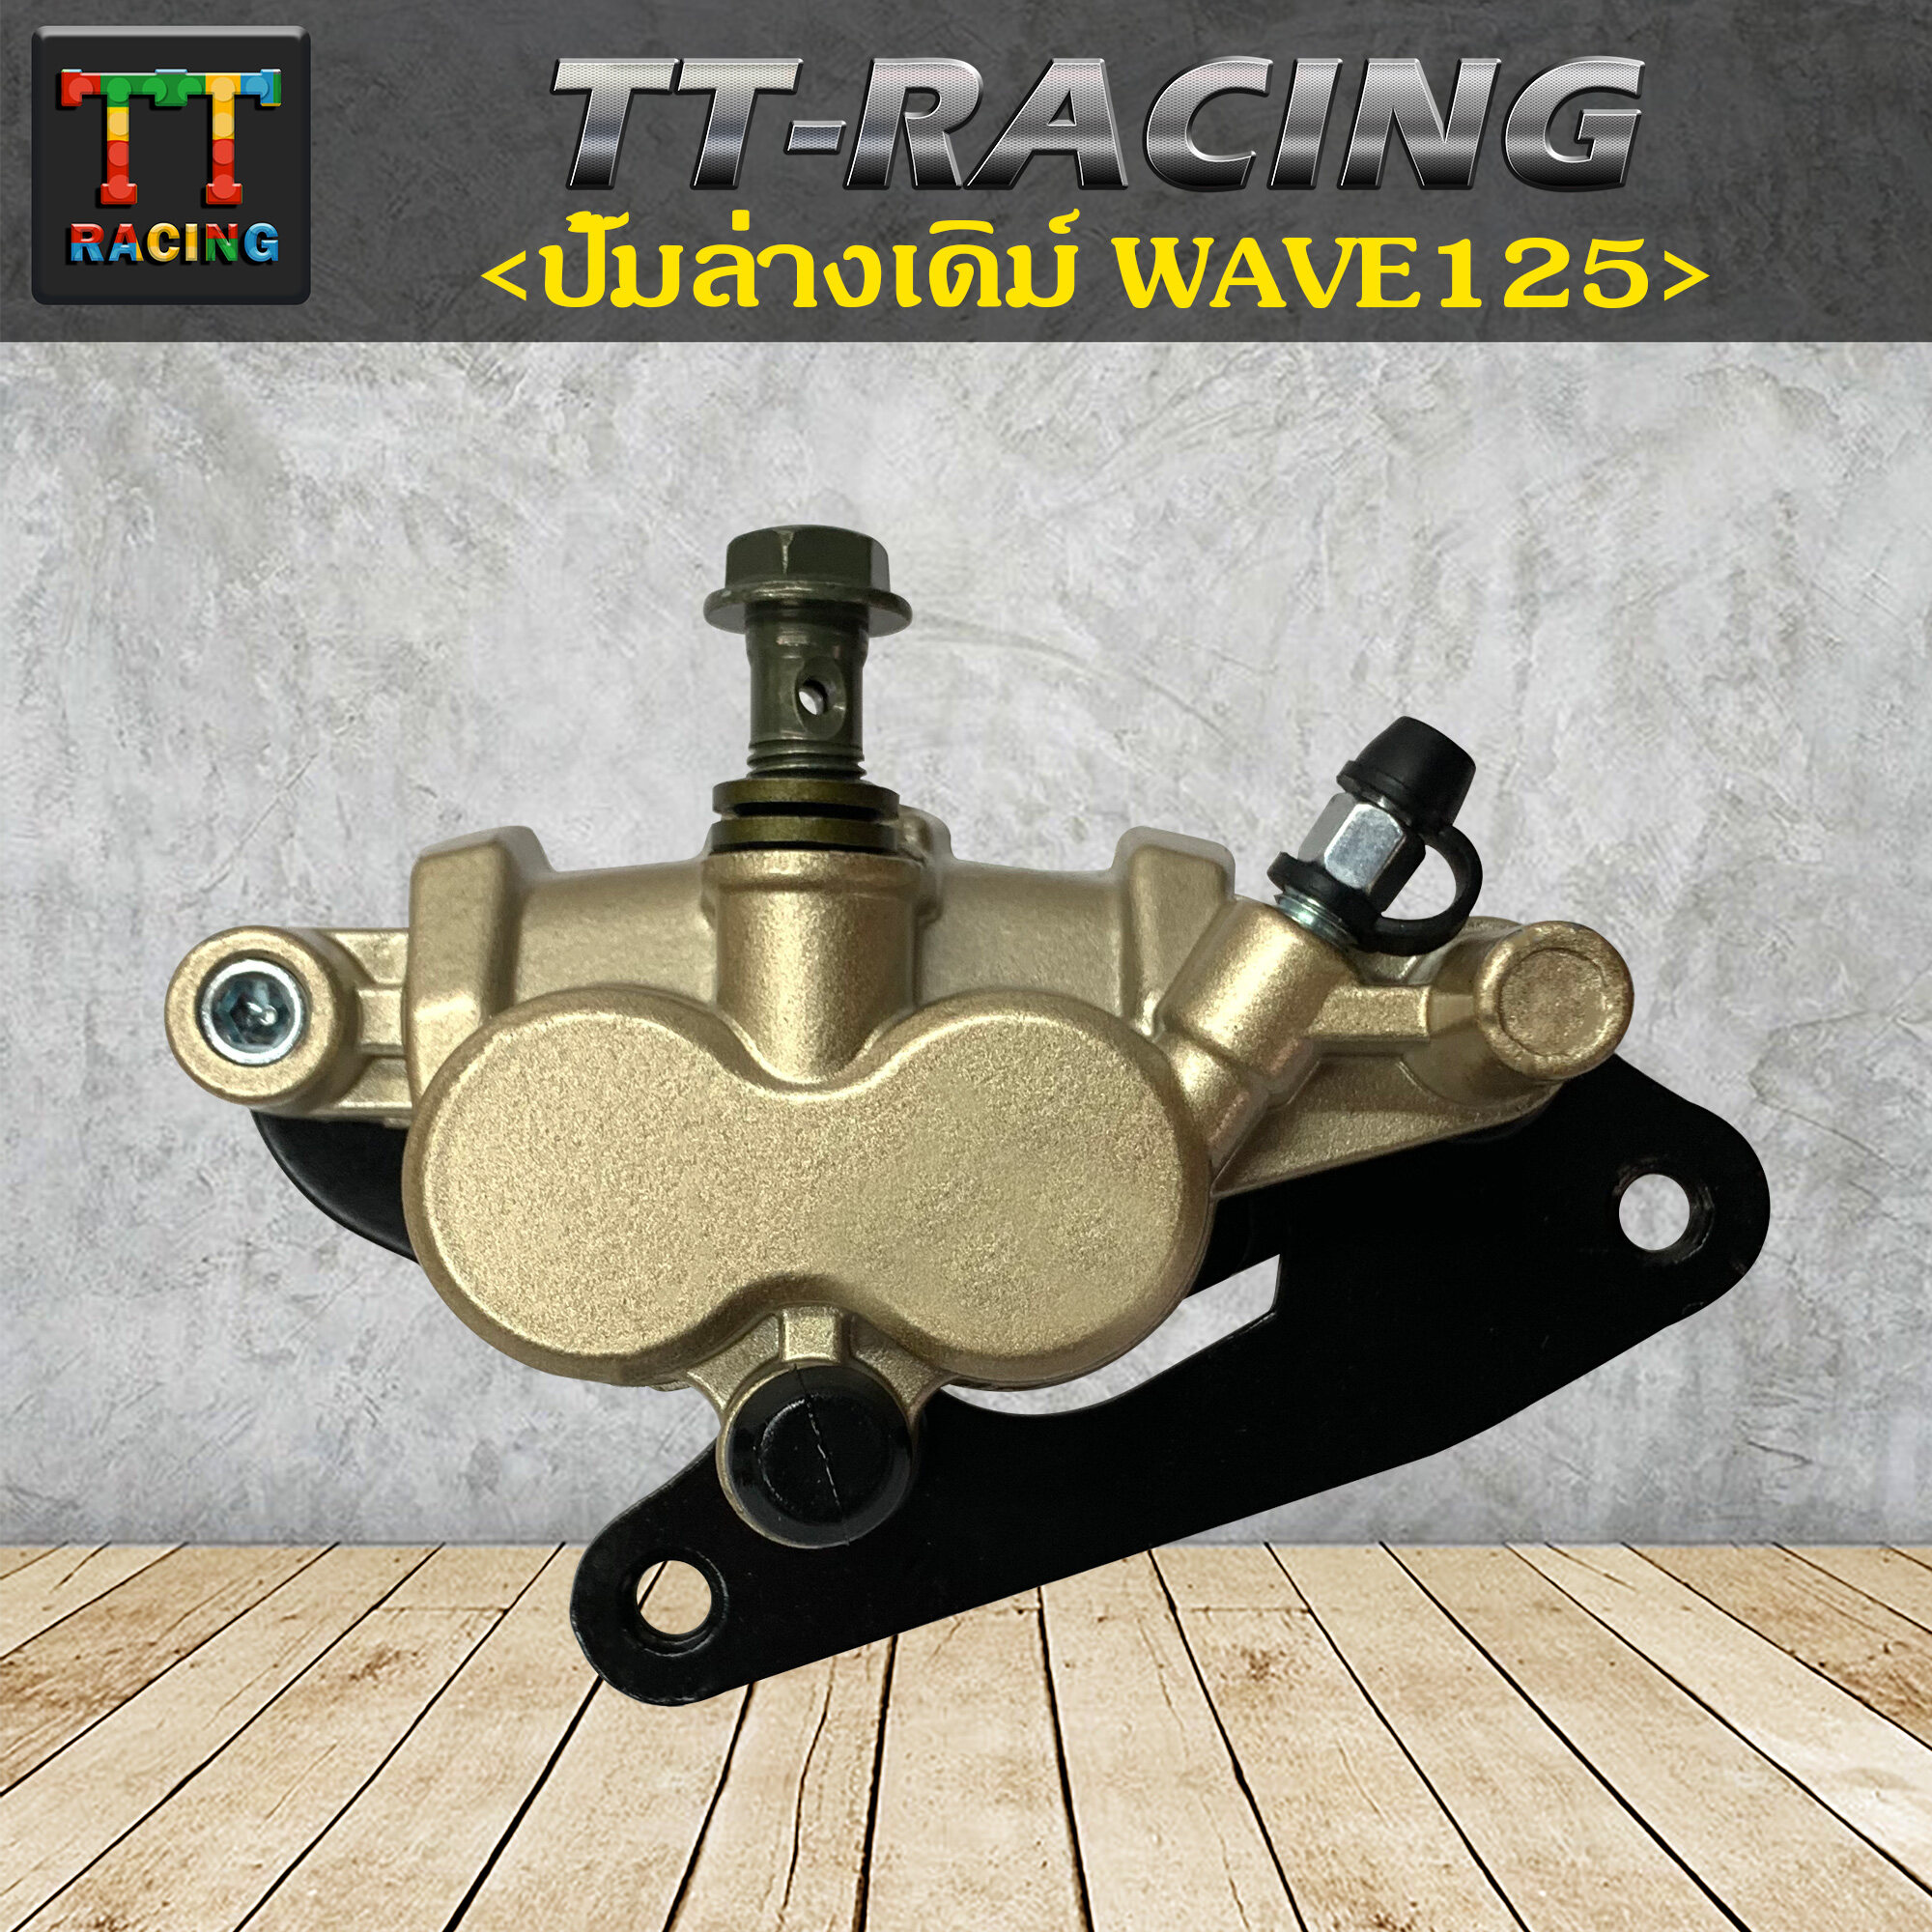 TT RACING ปั้มล่างเดิมรุ่น Wave125, Wave125r, Wave125s,W100s2005